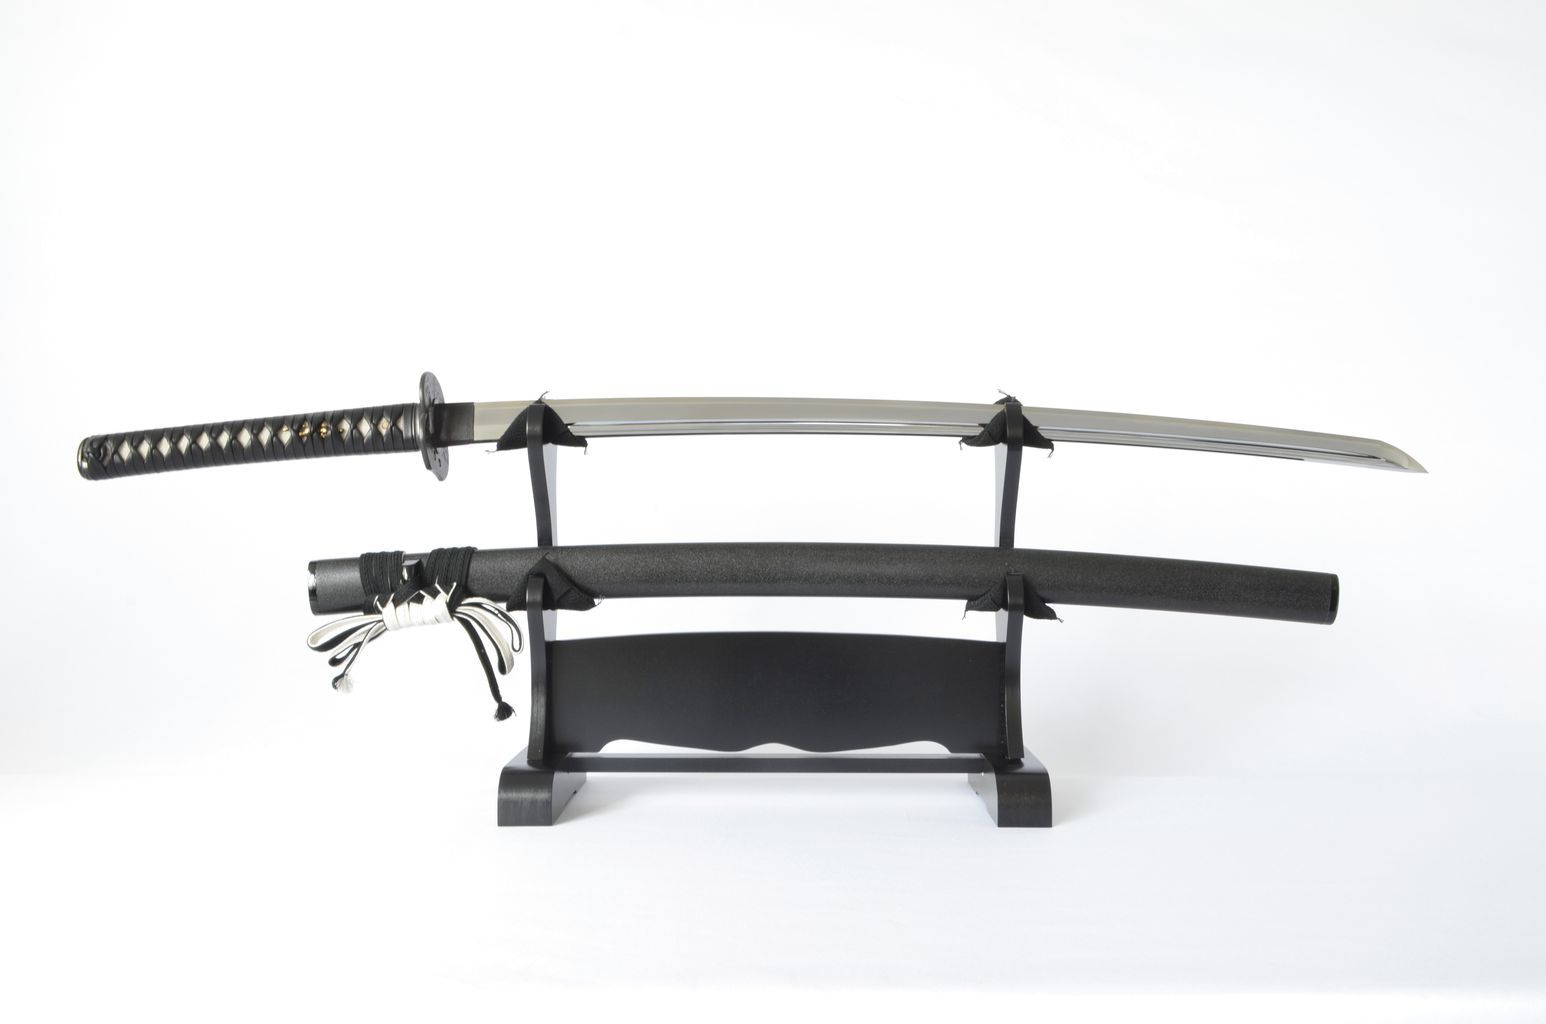 Iai practice sword "Urushinui koshirae by Kotetsu"